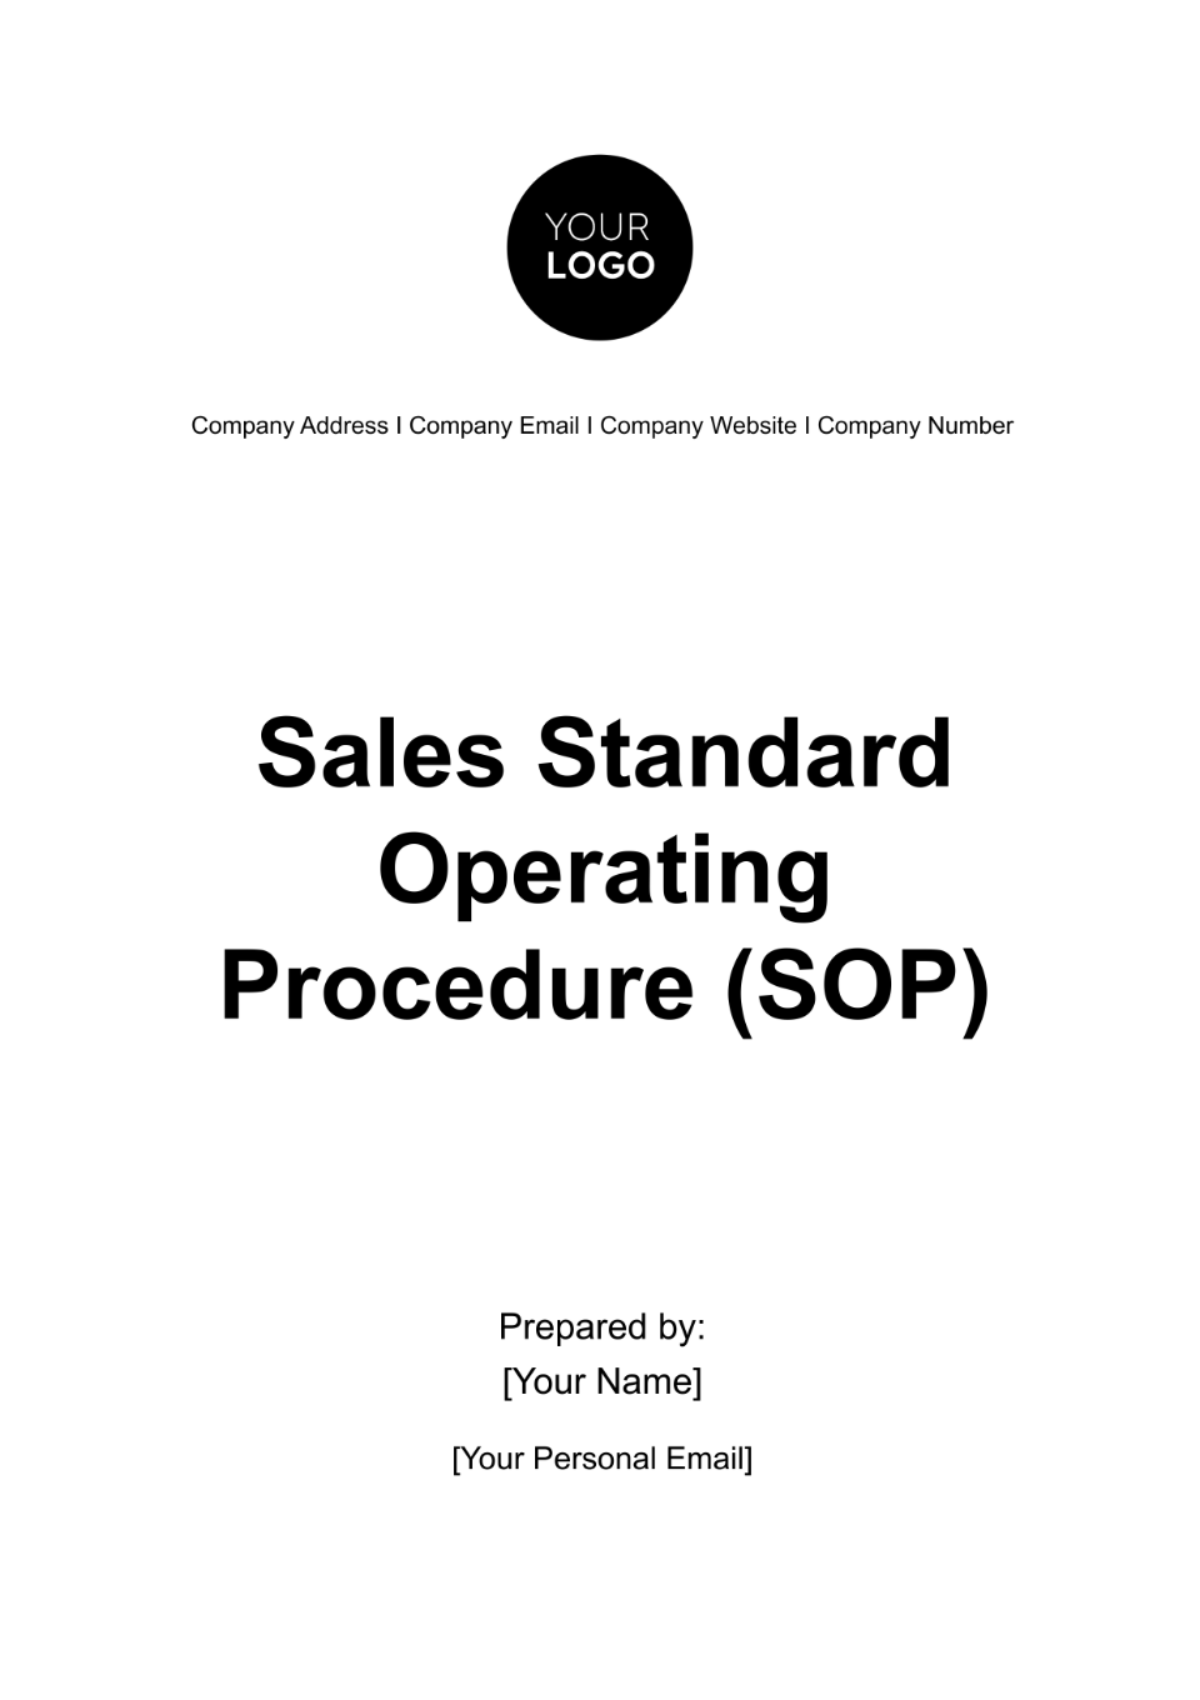 Free Sales Standard Operating Procedure (SOP) Template